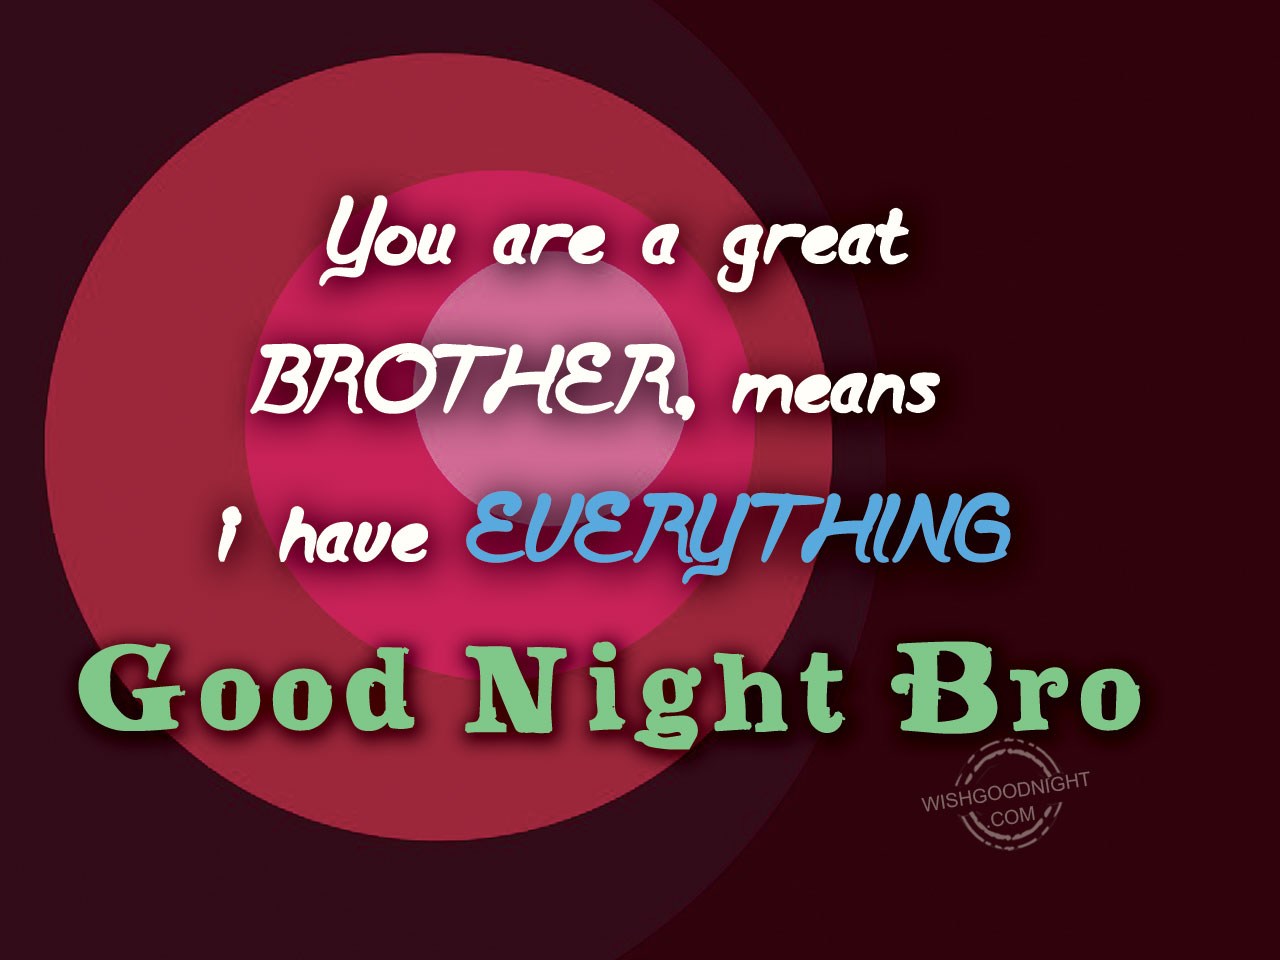 Good night big brother